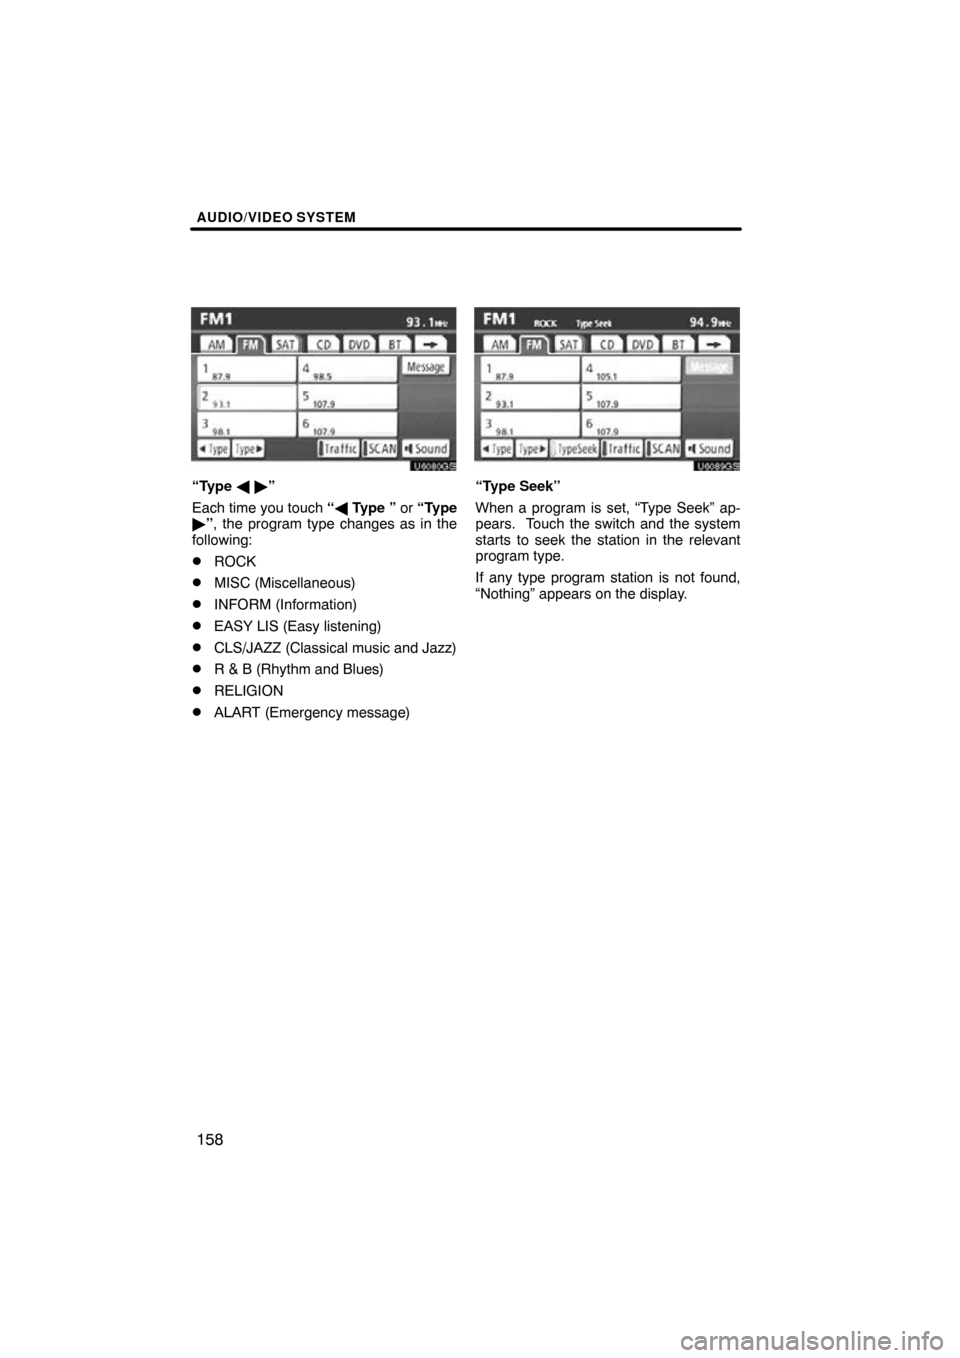 TOYOTA HIGHLANDER 2013 XU50 / 3.G Navigation Manual AUDIO/VIDEO SYSTEM
158
U6080GS
“Type   ”
Each time you touch  “ Type ” or “Type
 ”, the program type changes as in the
following:
ROCK
MISC (Miscellaneous)
INFORM (Information)
EAS